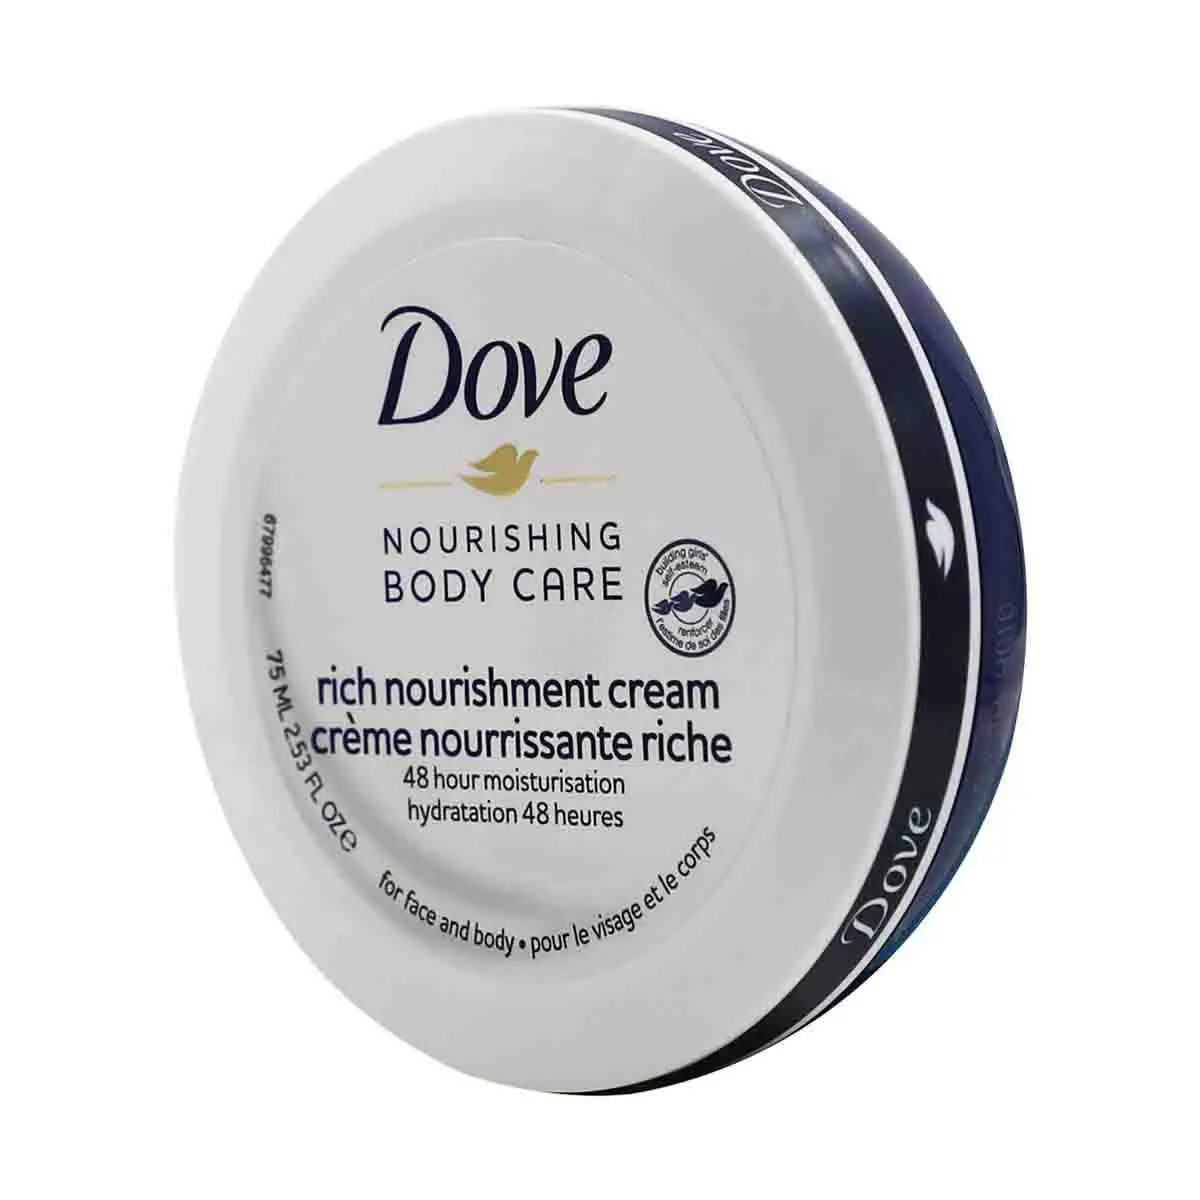 Doves Intensive Nourishing Skin Care Cream LOT of 2 Daily Moisturizer 2.53 oz